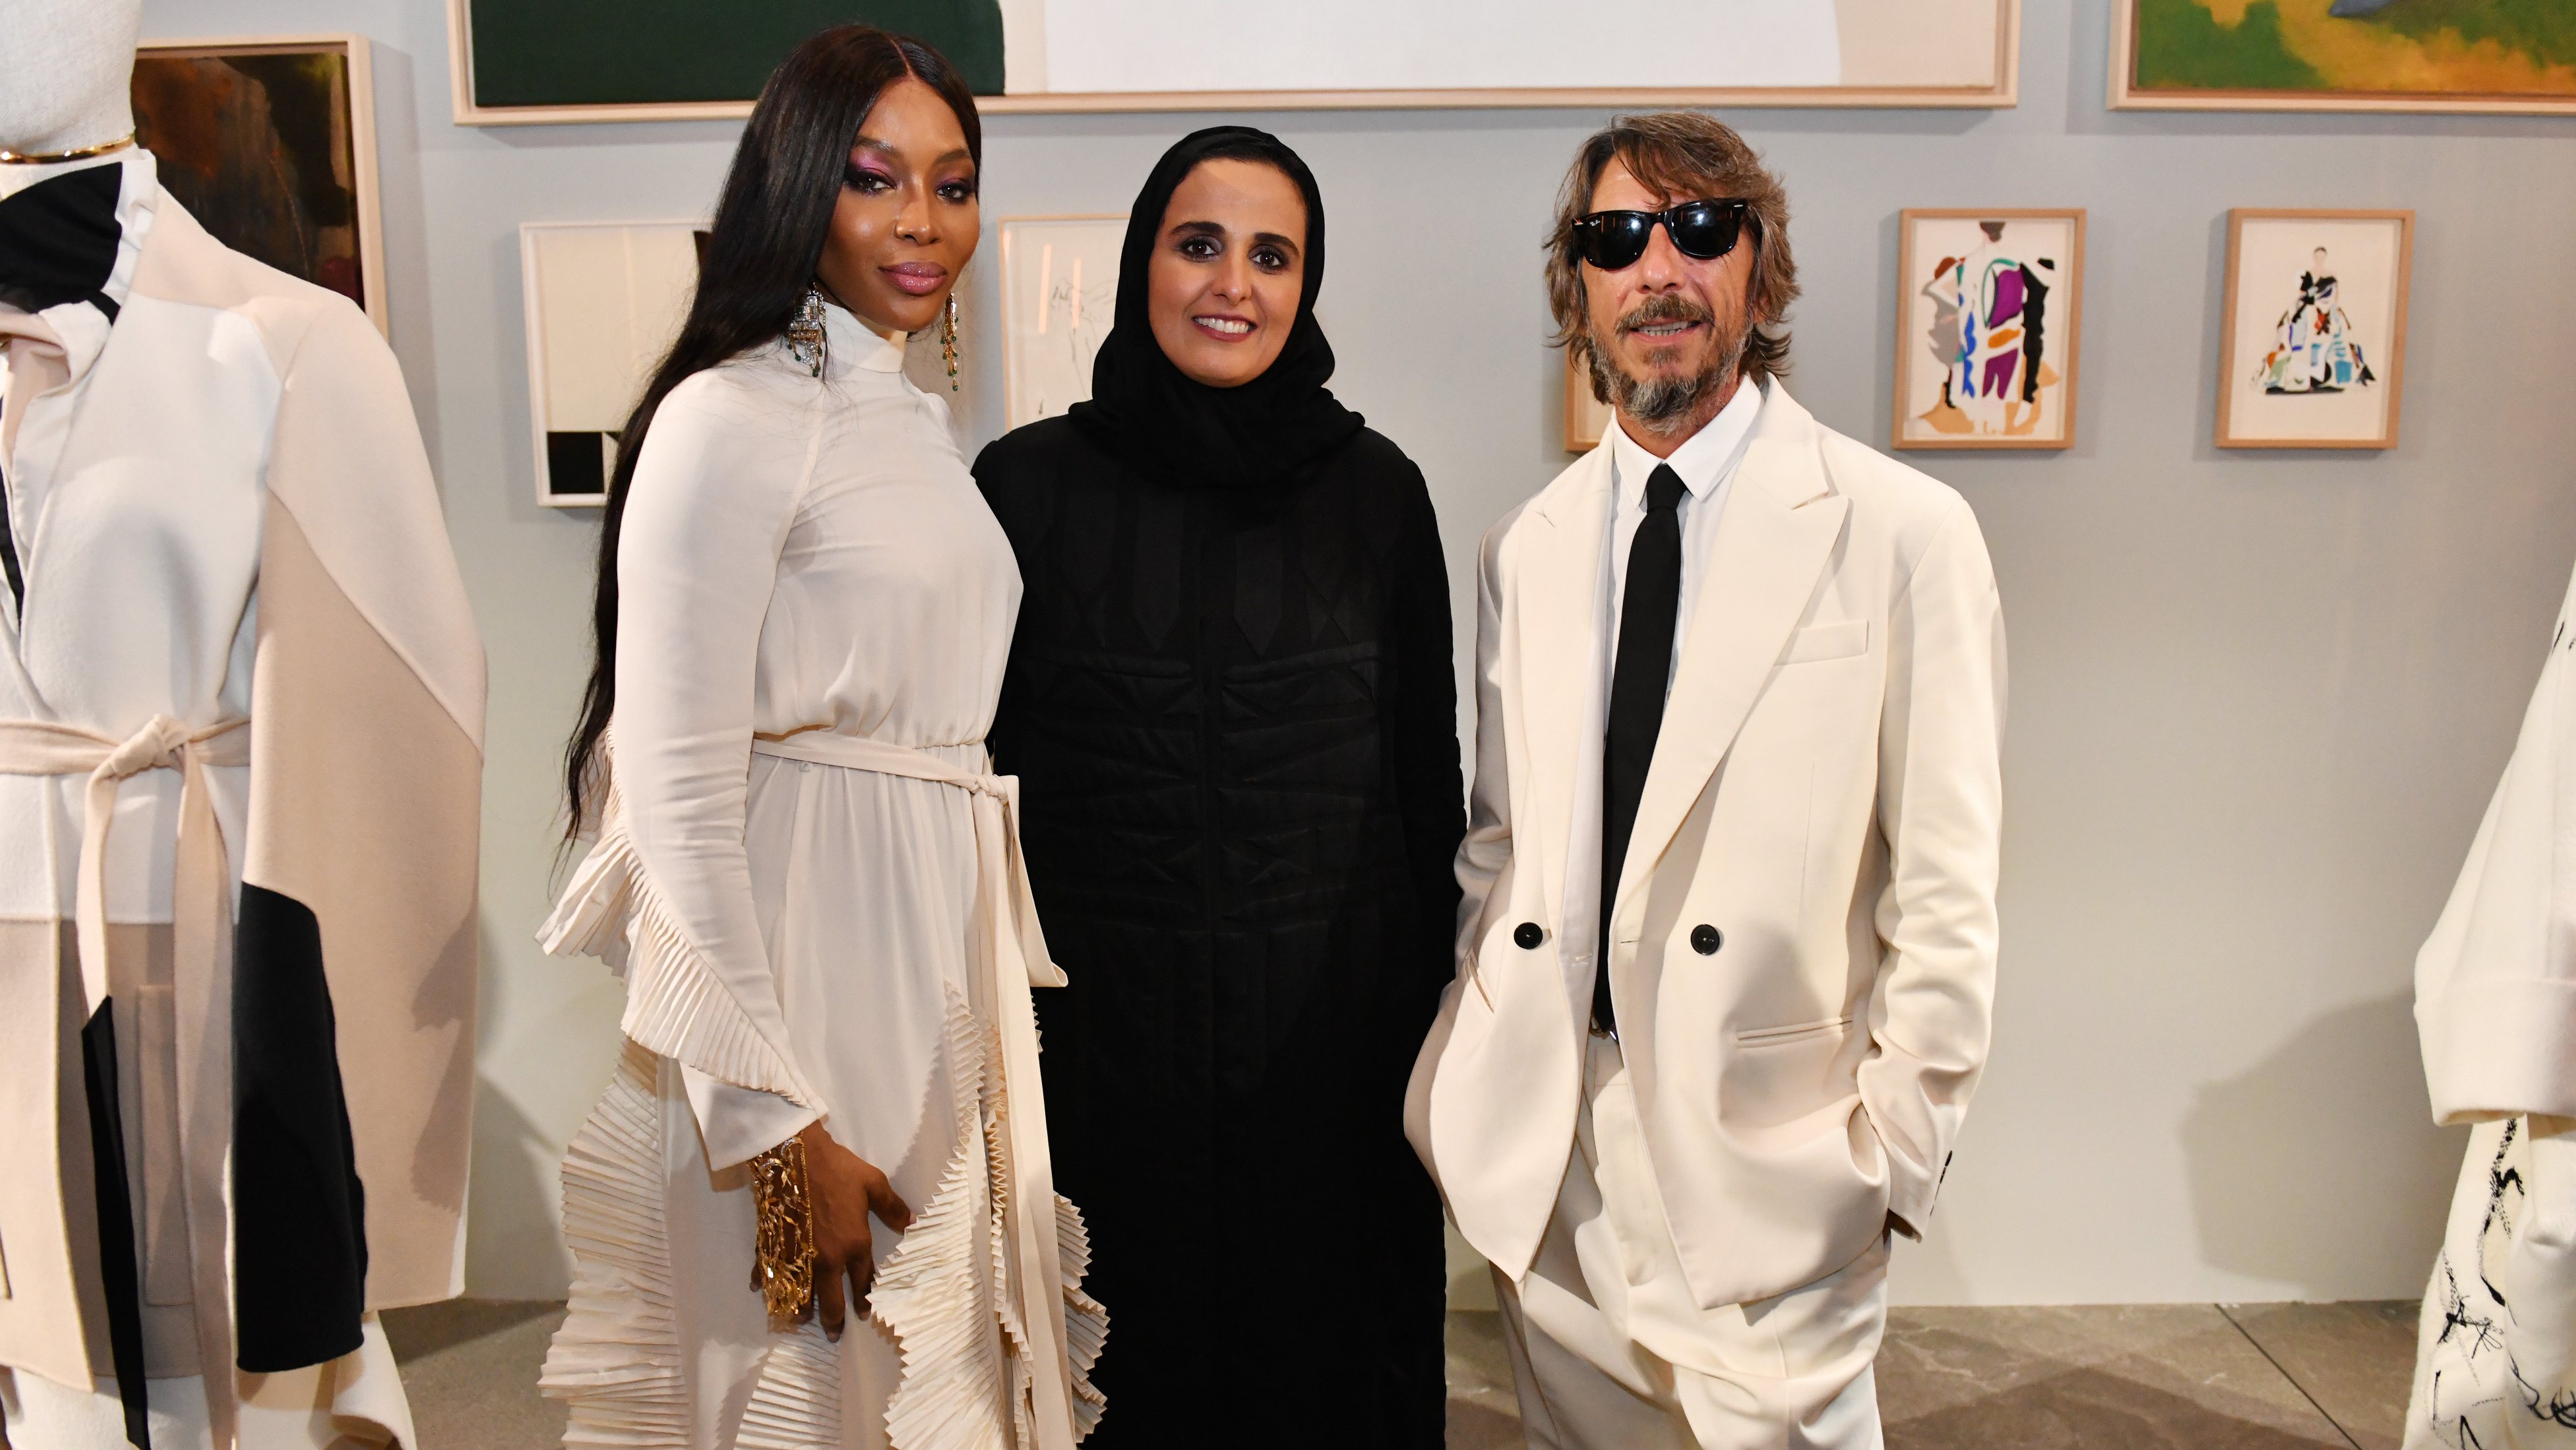 Her Excellency Sheikha Al Mayassa Bint Hamad bin Khalifa Al Thani And #QatarCreates Kick Off Celebration Of Art, Fashion, And Design With Maison Valentino